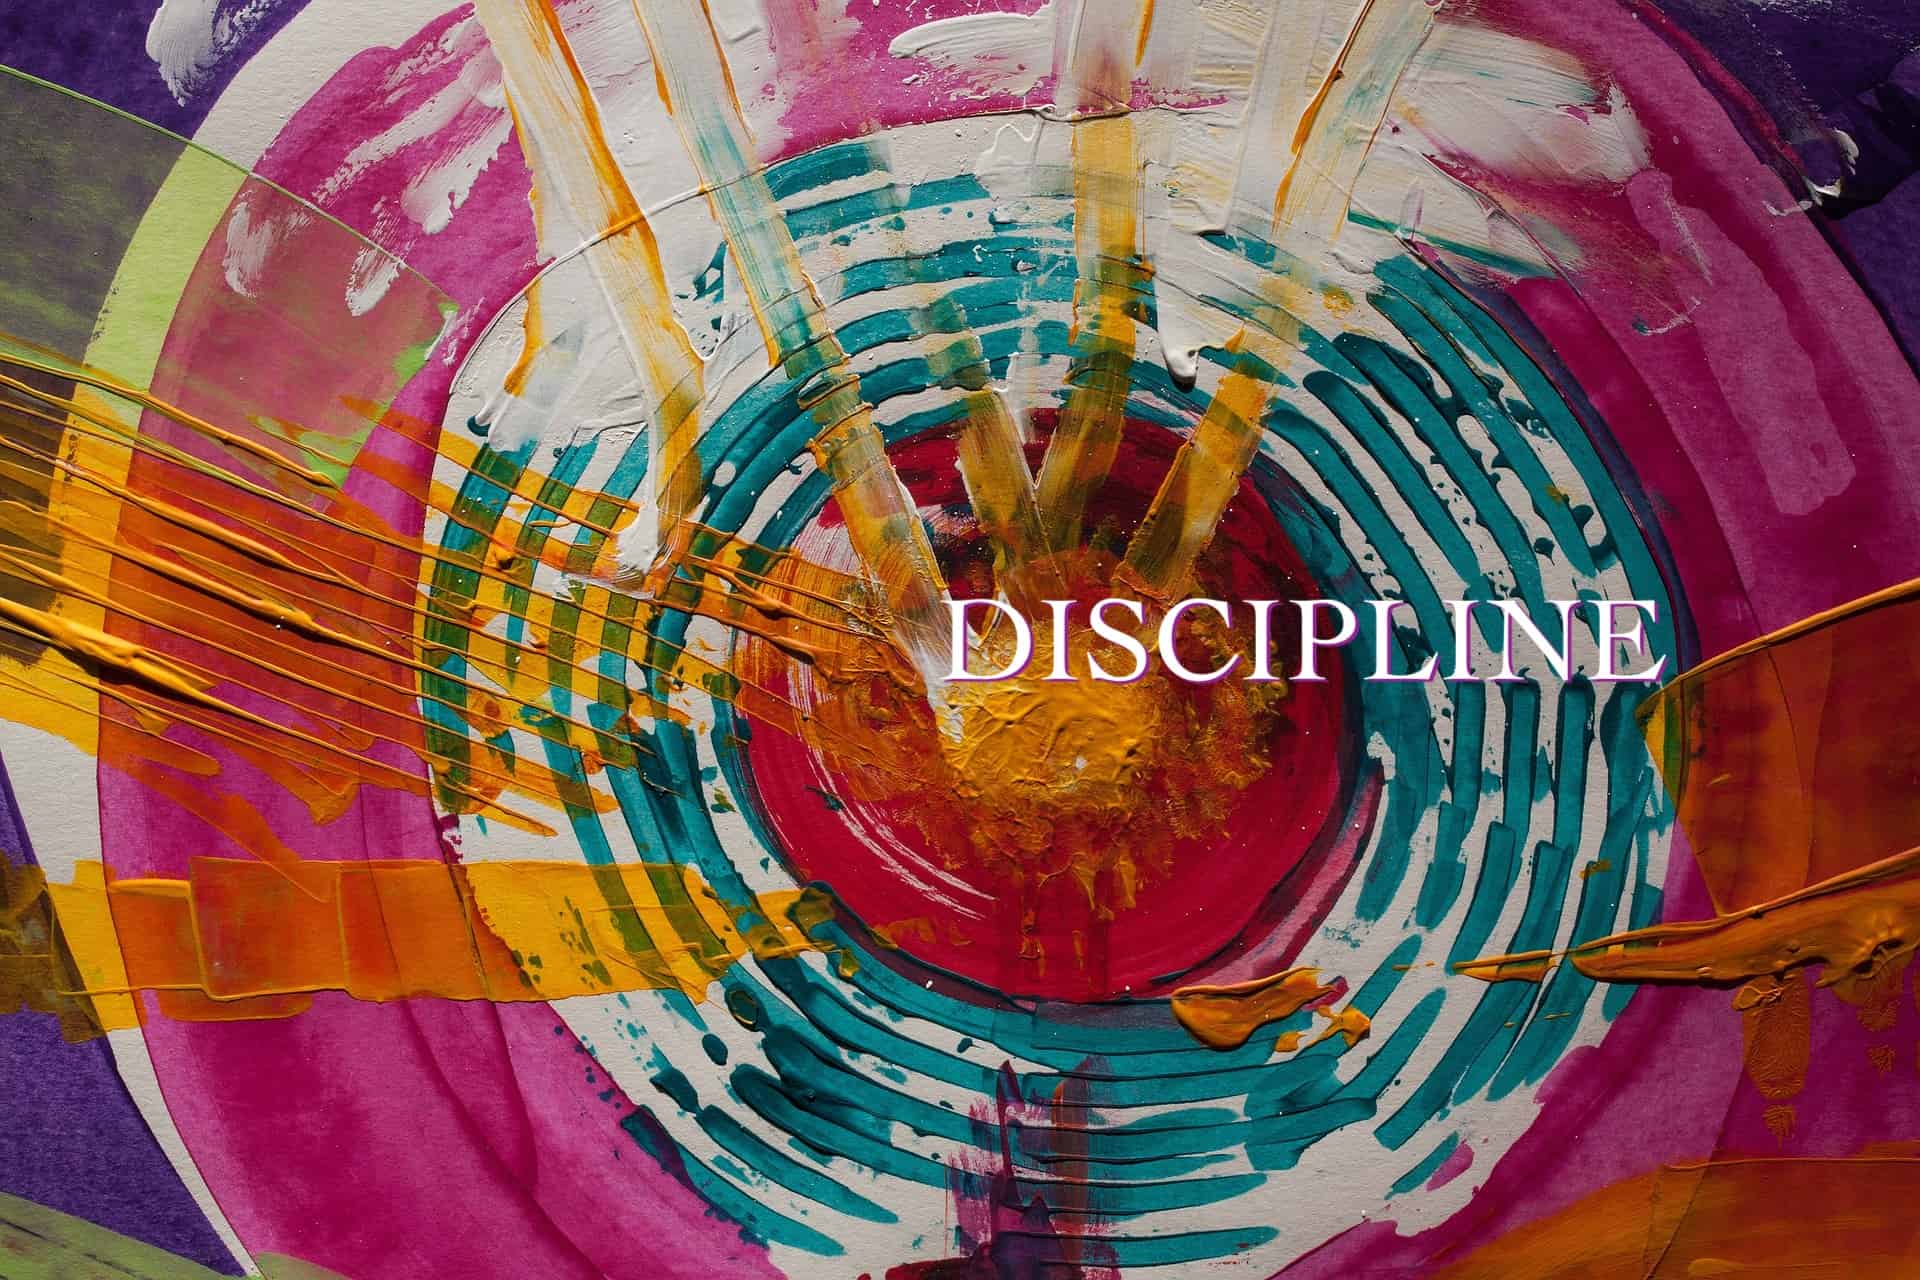 colorful circular art piece with discipline text